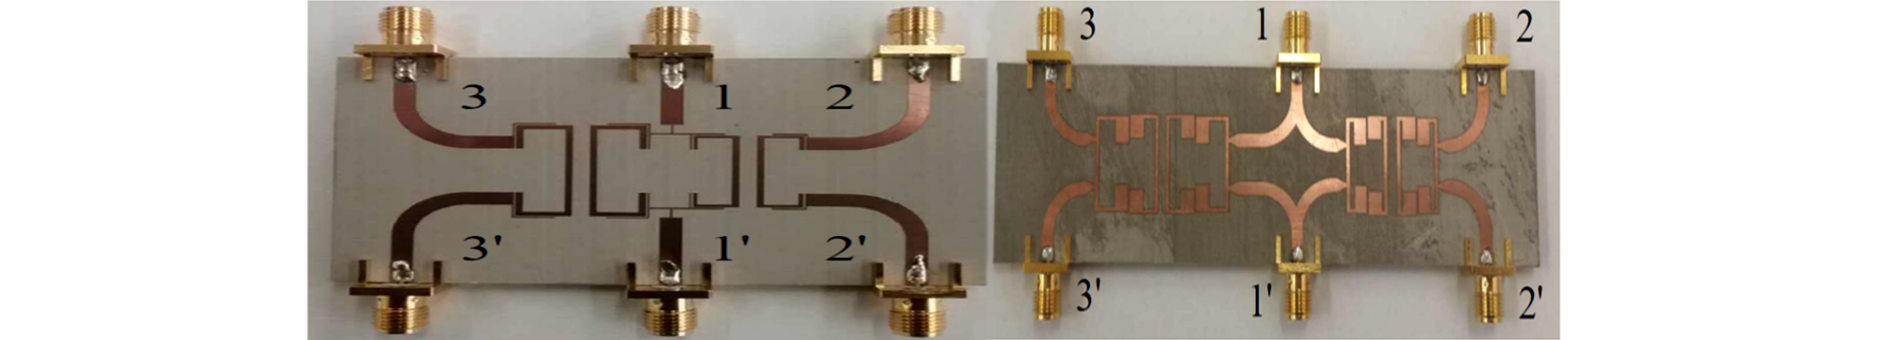 Balanced-to-Balanced Microstrip Diplexer Based on Magnetically Coupled Resonators